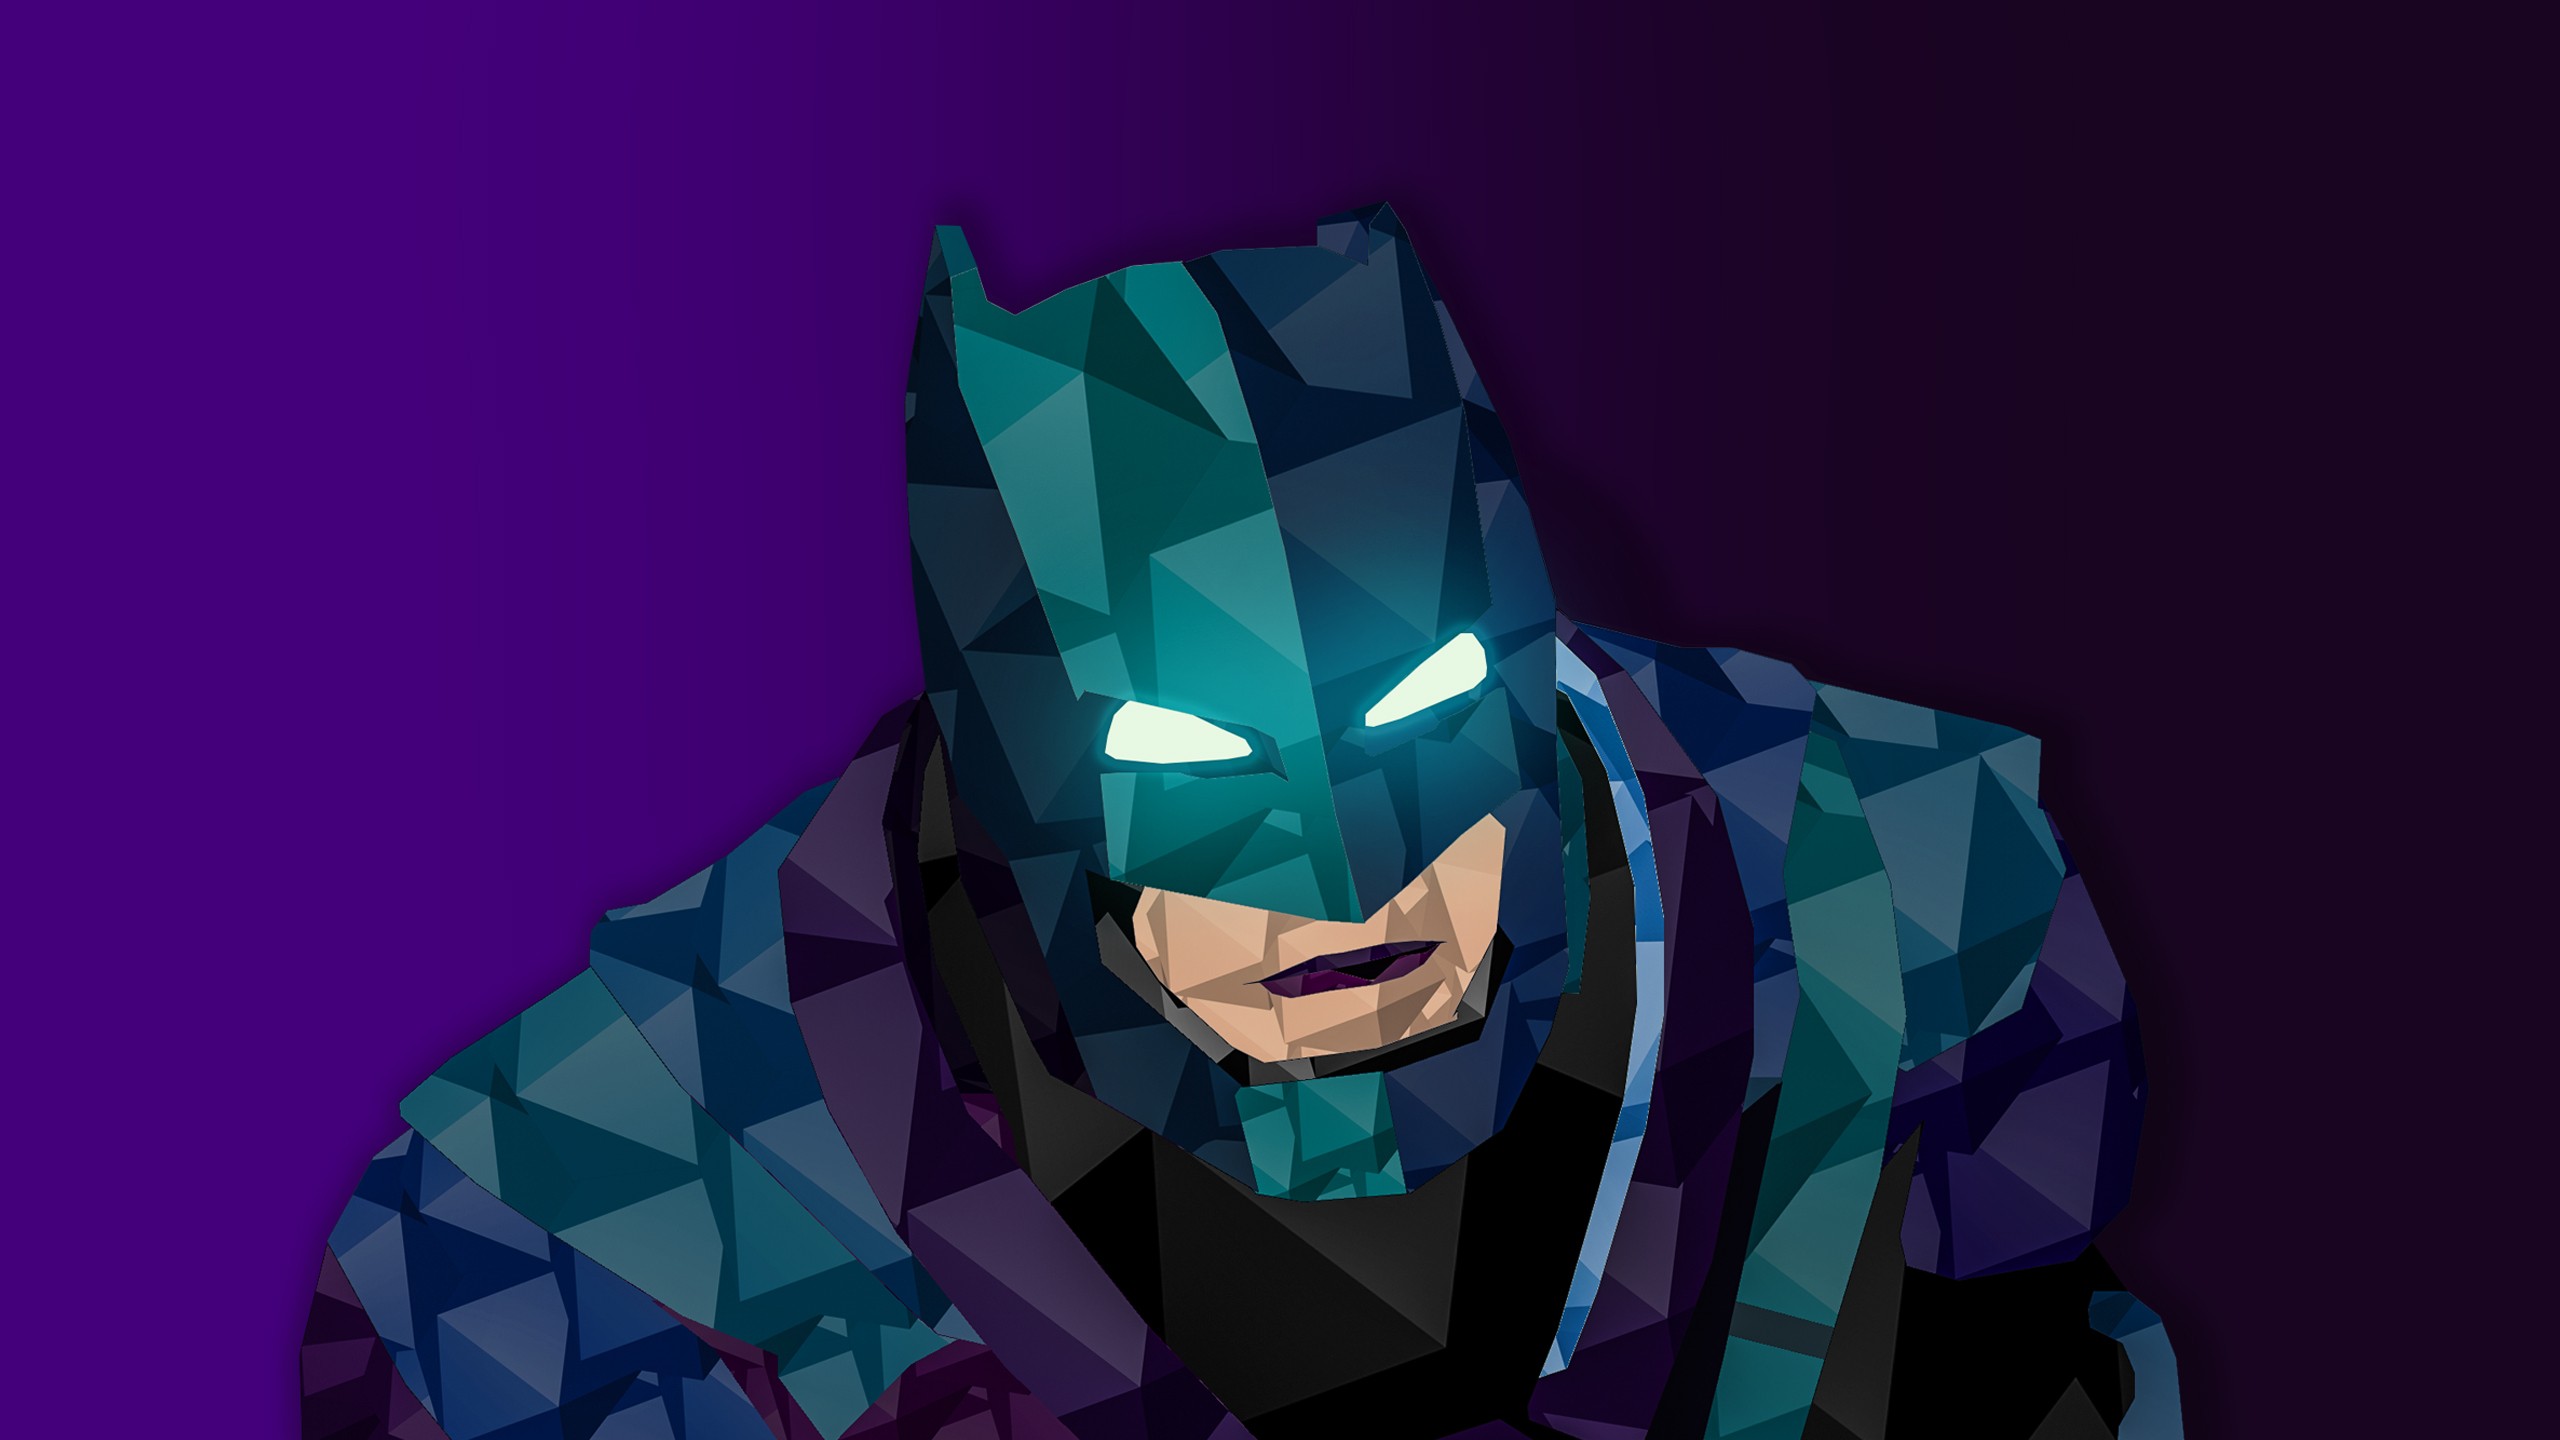 General 2560x1440 Batman Batman v Superman: Dawn of Justice low poly digital art gradient simple background purple background